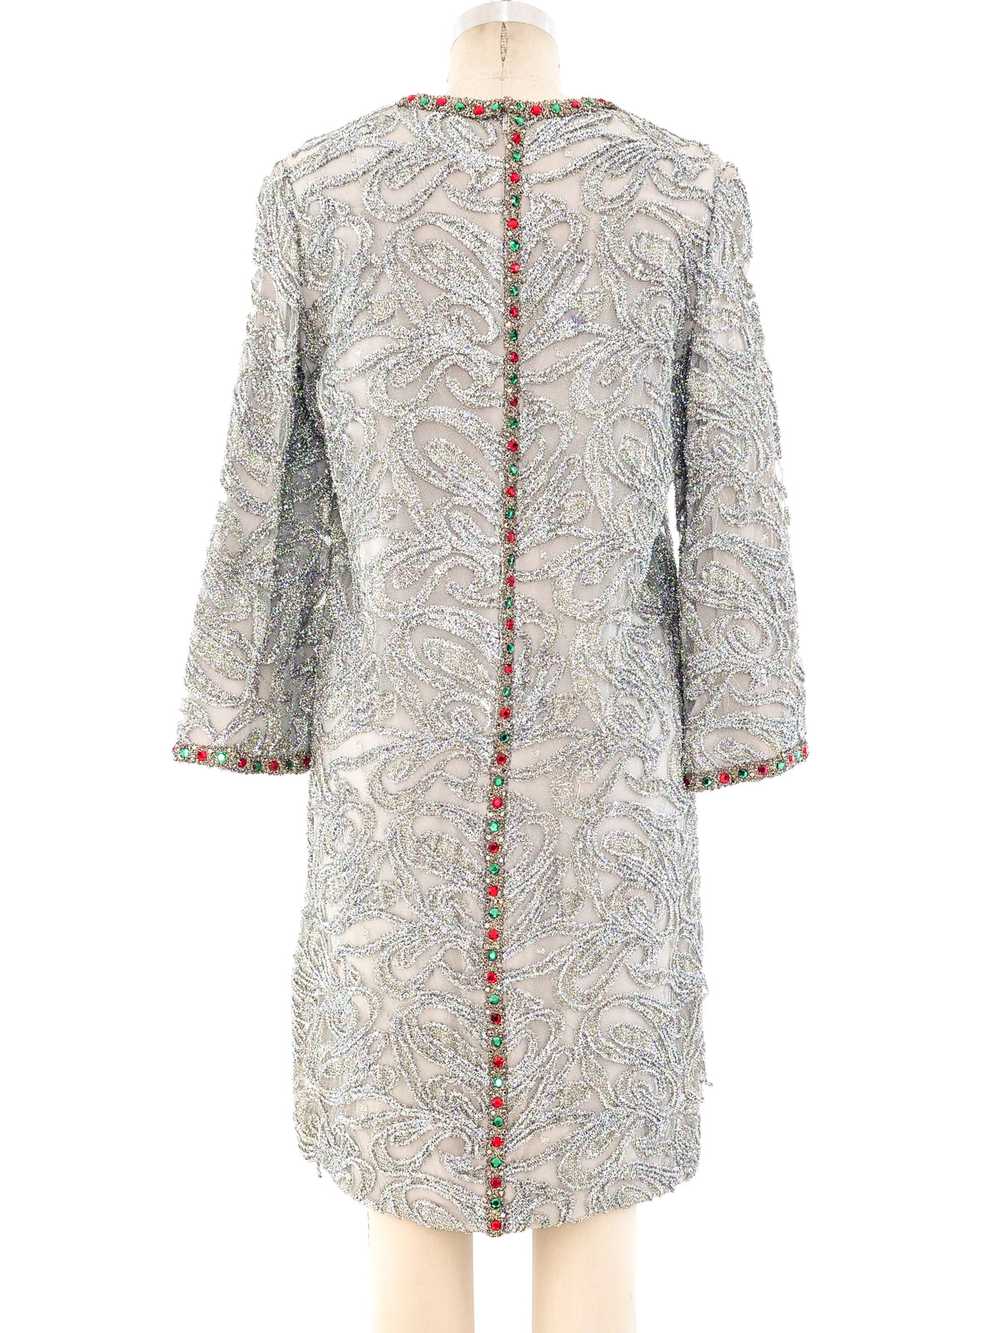 Bill Blass Tinsel and Crystal Embellished Dress - image 3